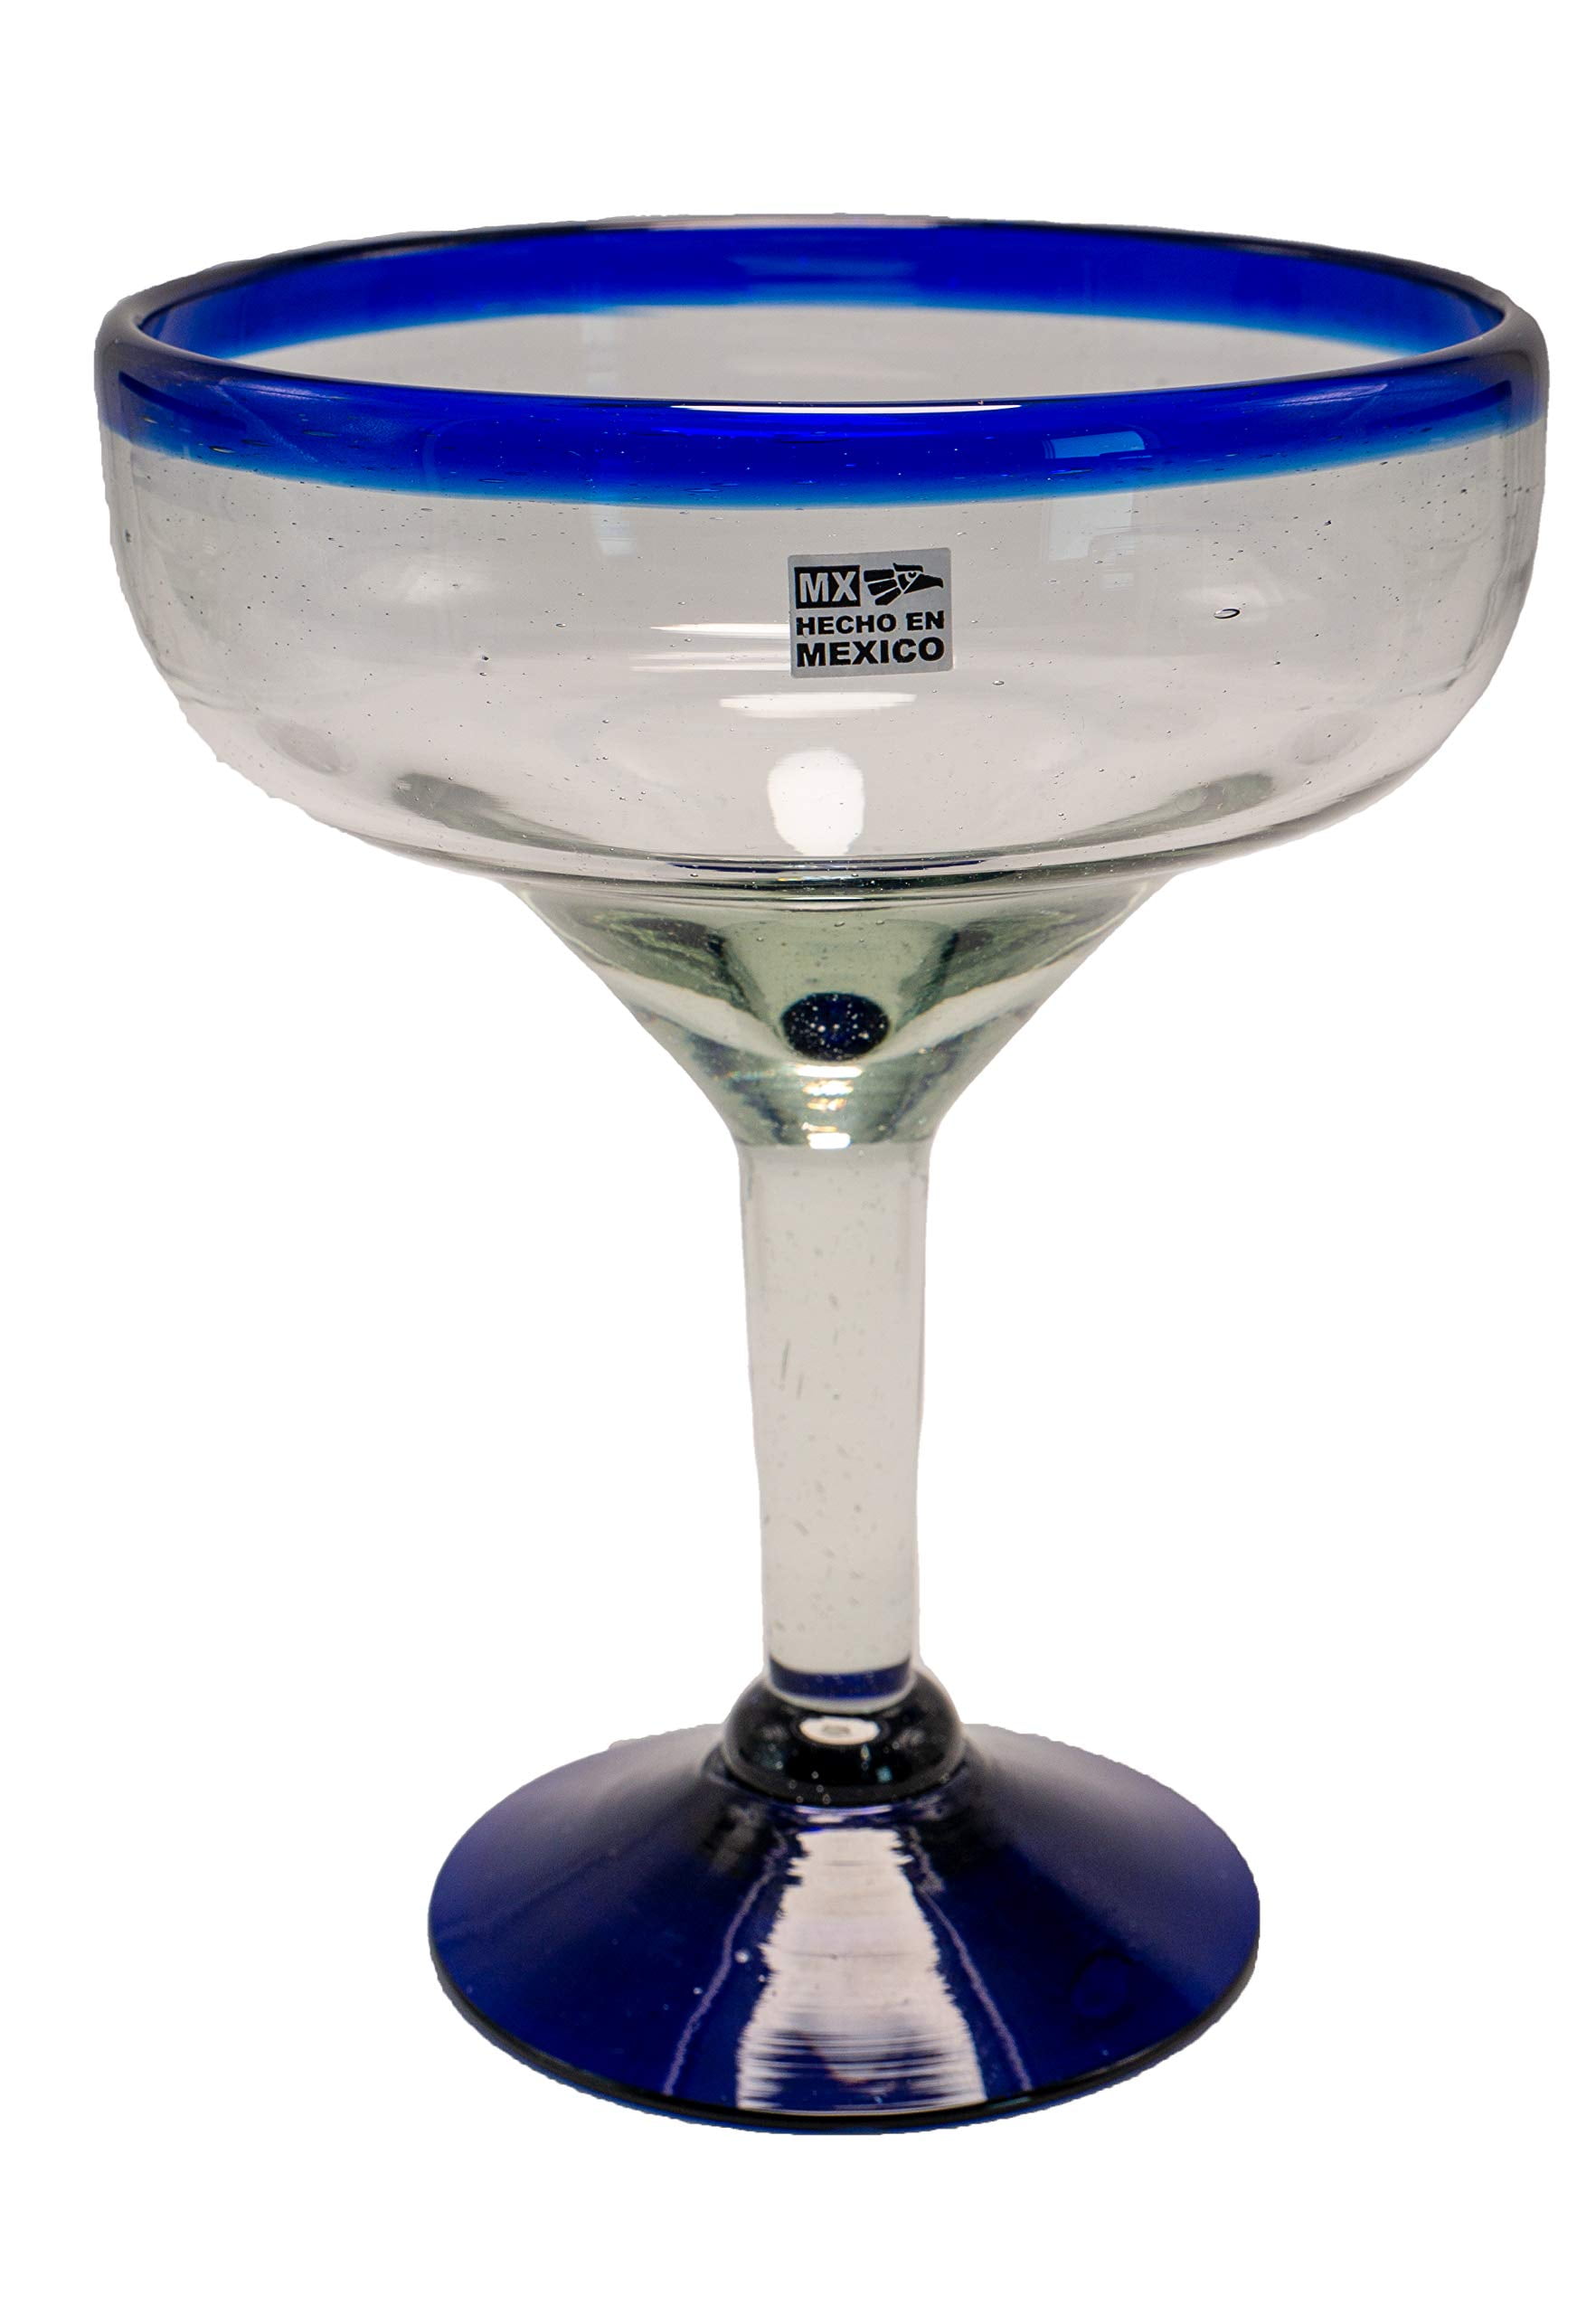 ELIXIR GLASSWARE Martini Glasses Set of 4 - Hand